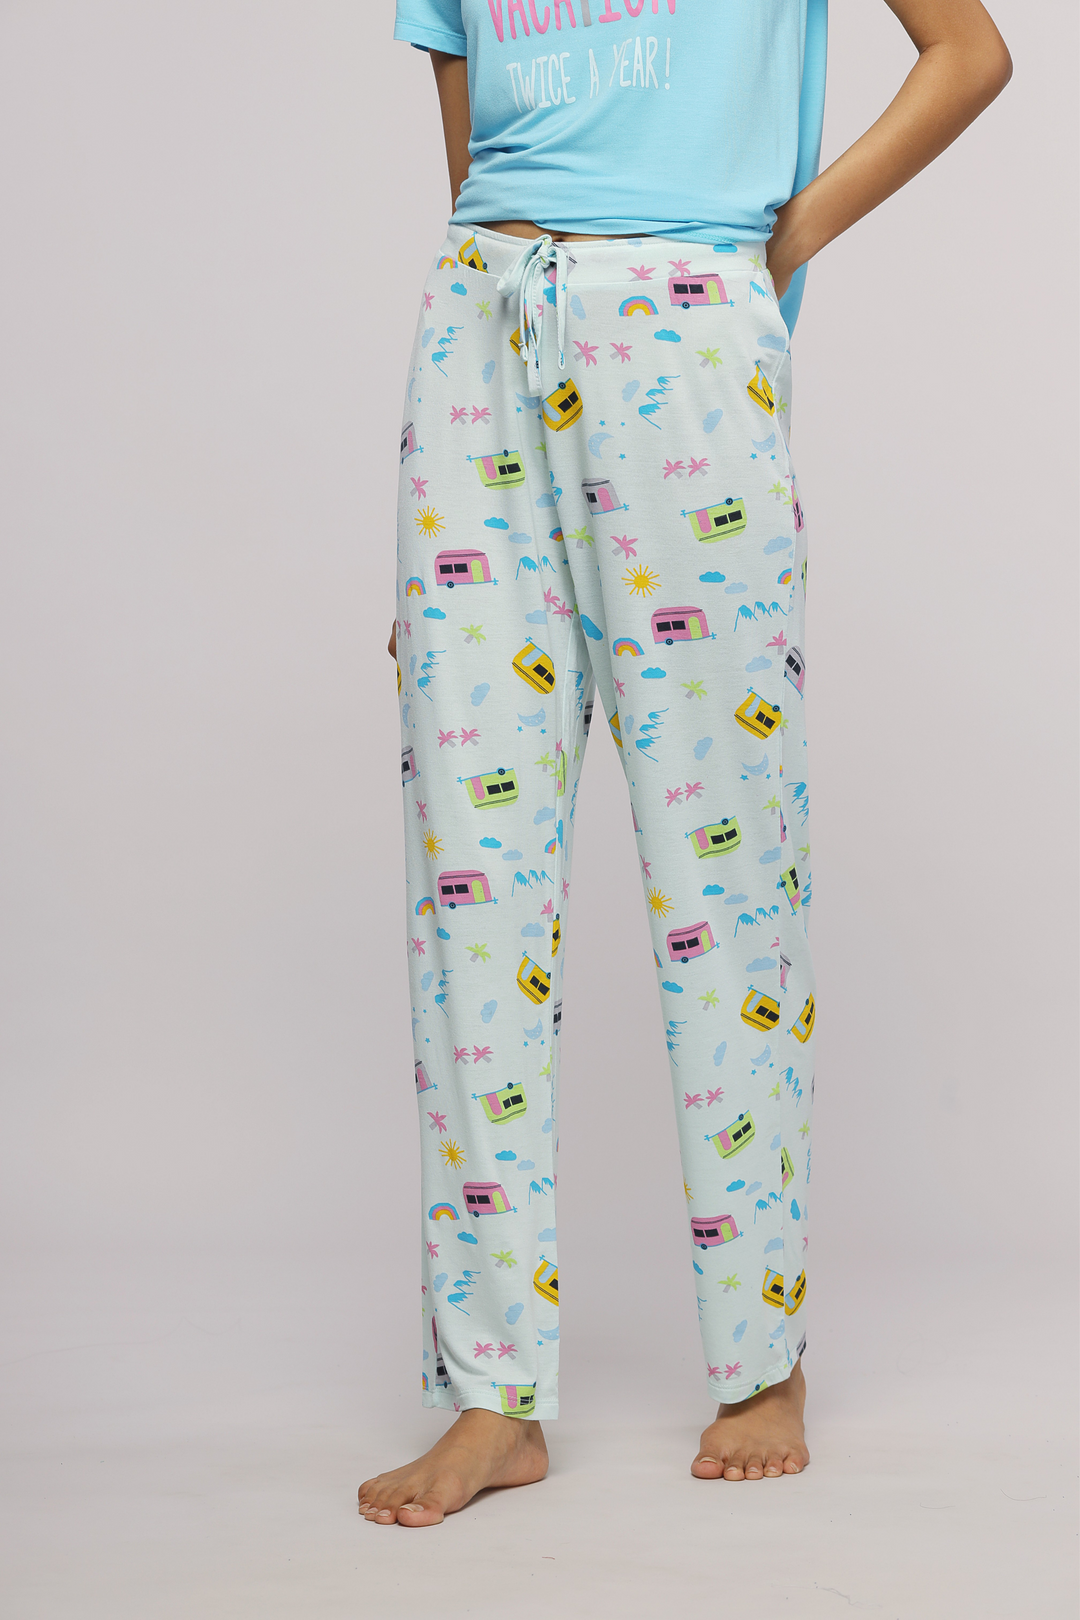 The Voyager Pajama